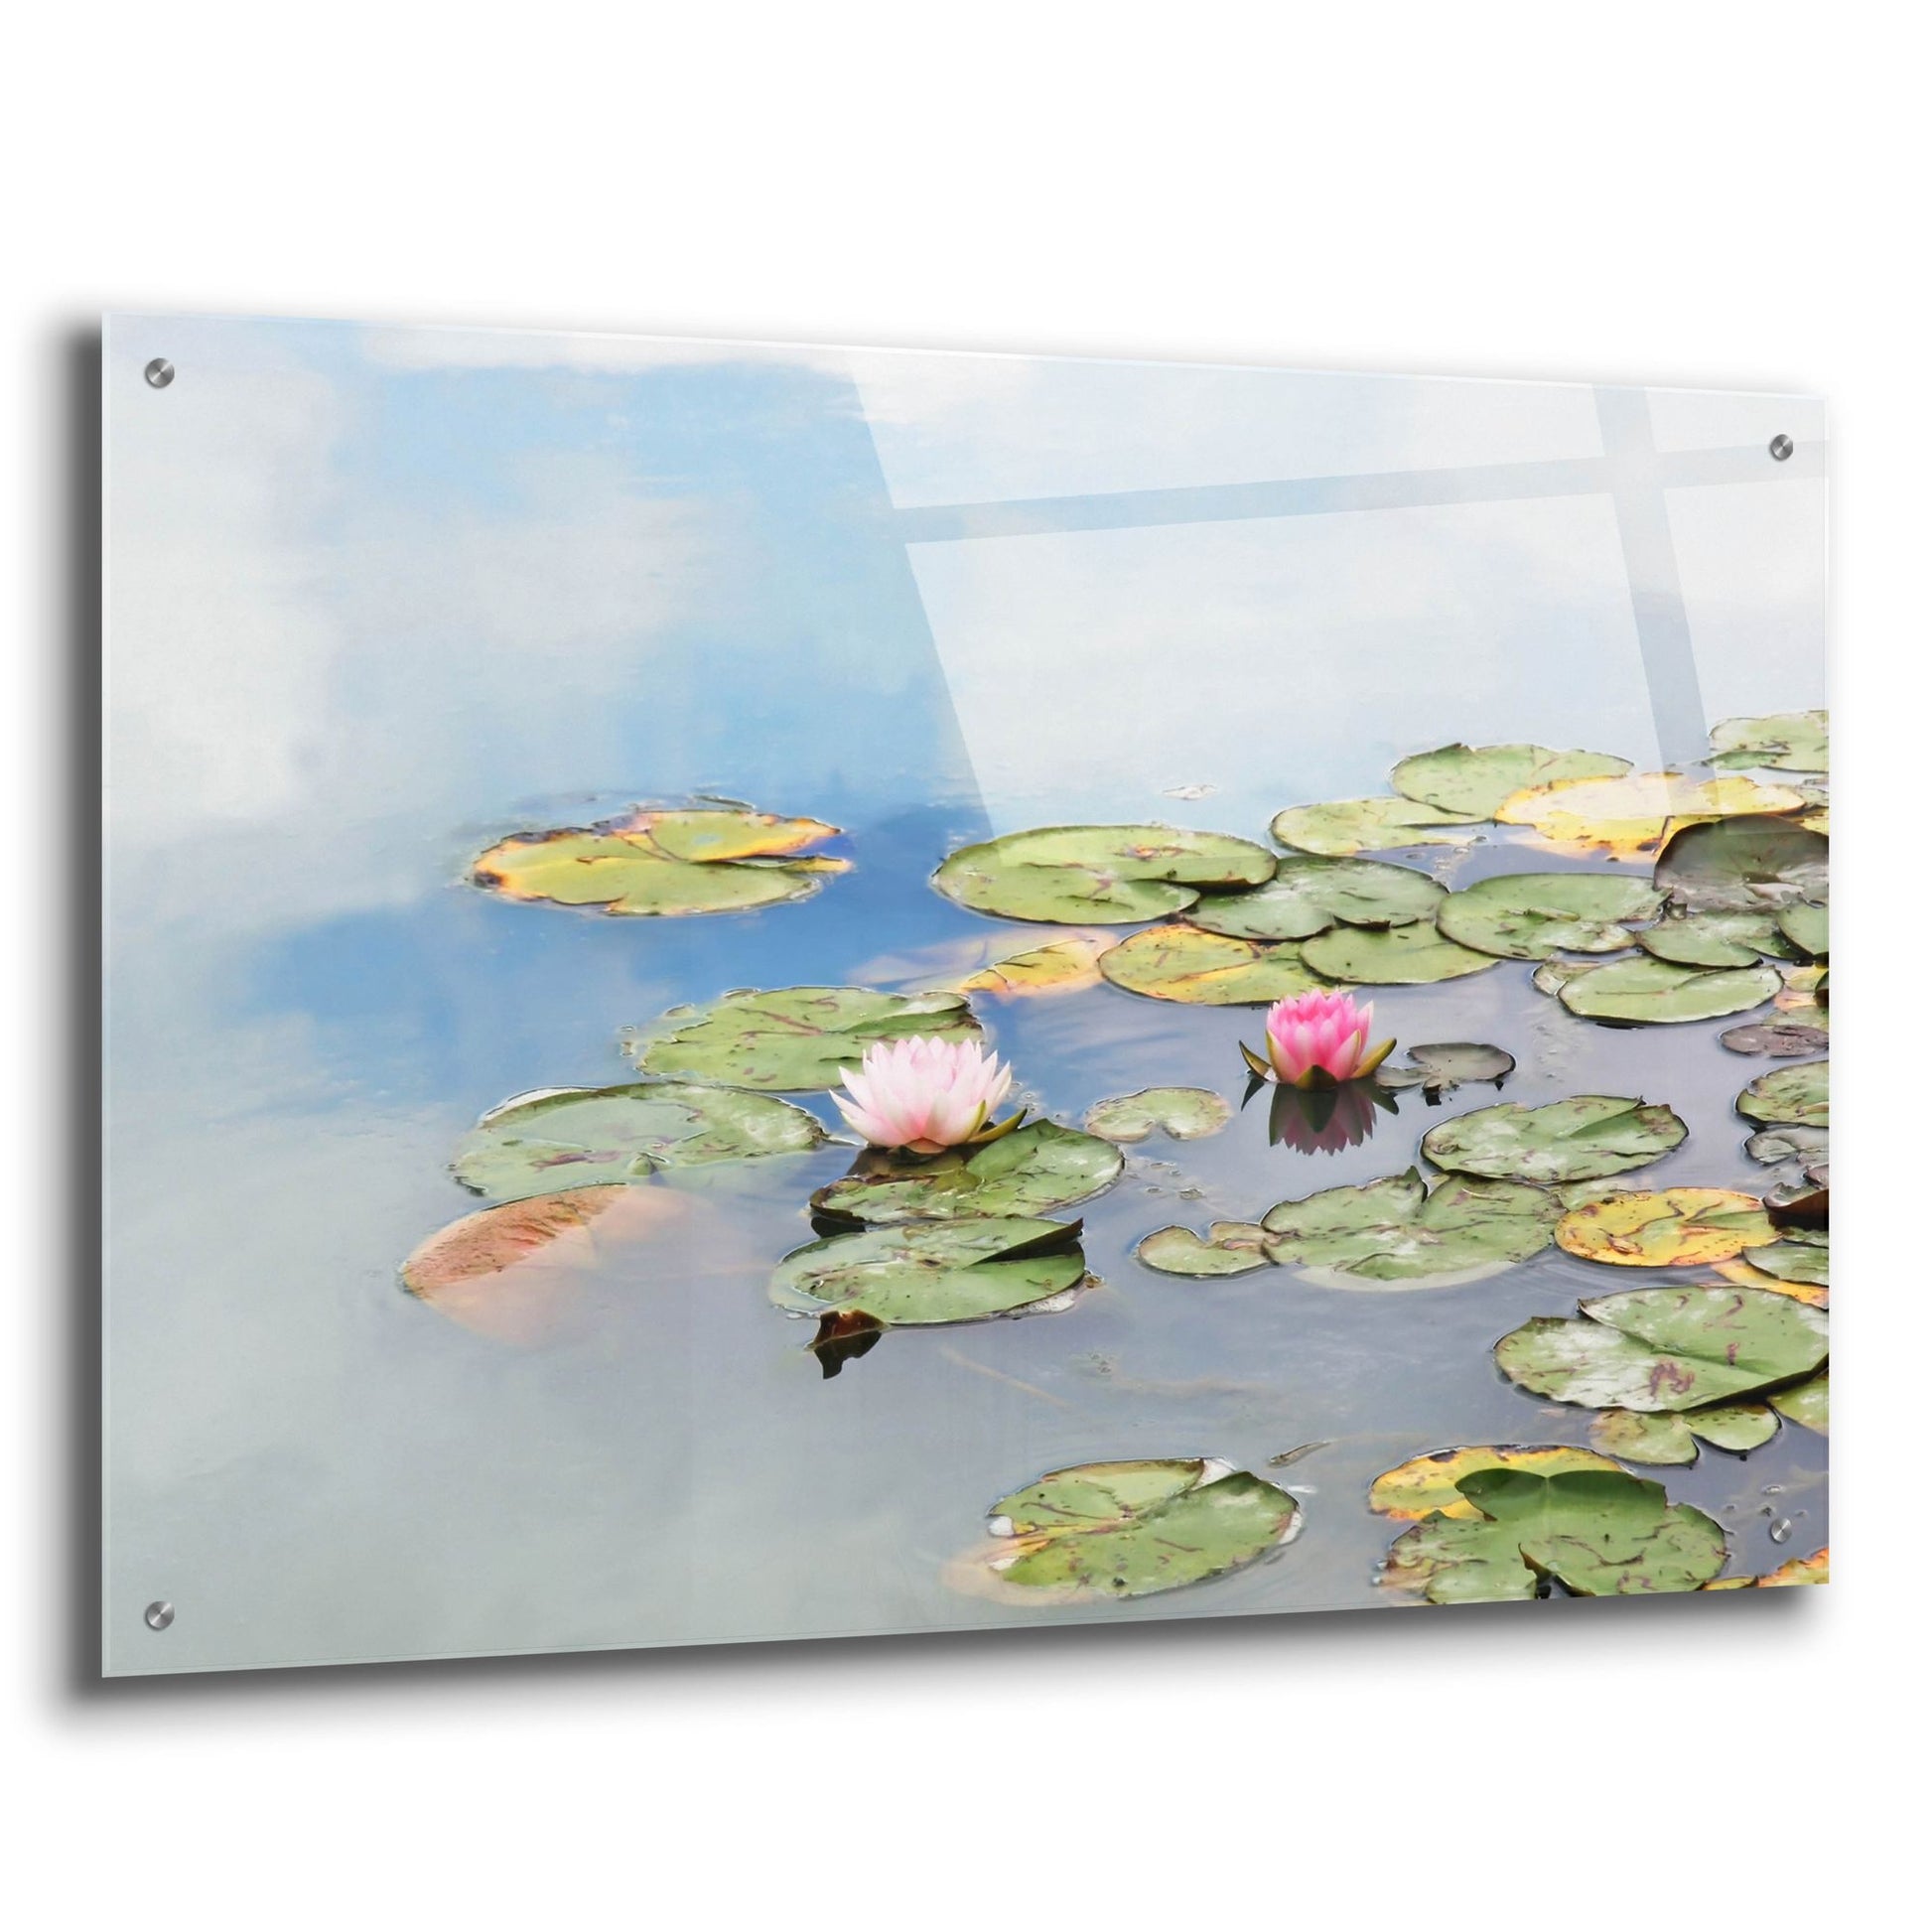 Epic Art ' Monet's Garden' by Brooke T. Ryan, Acrylic Glass Wall Art,36x24